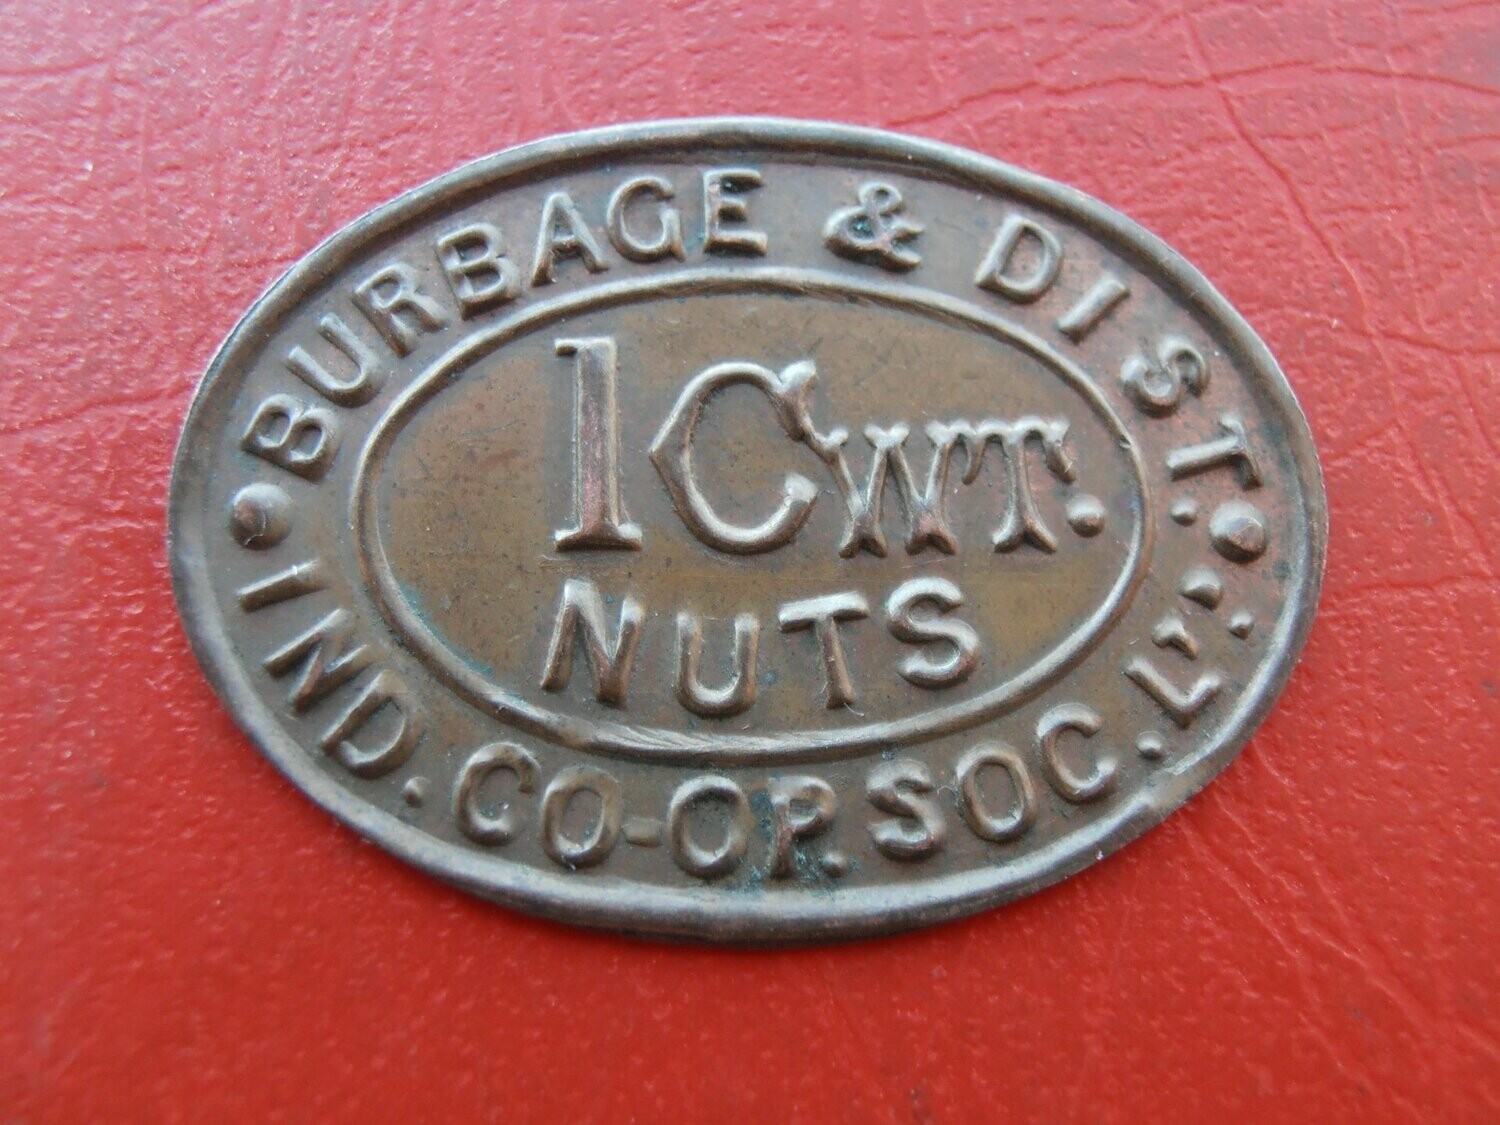 Burbage & District Coop 1 Cwt Nuts